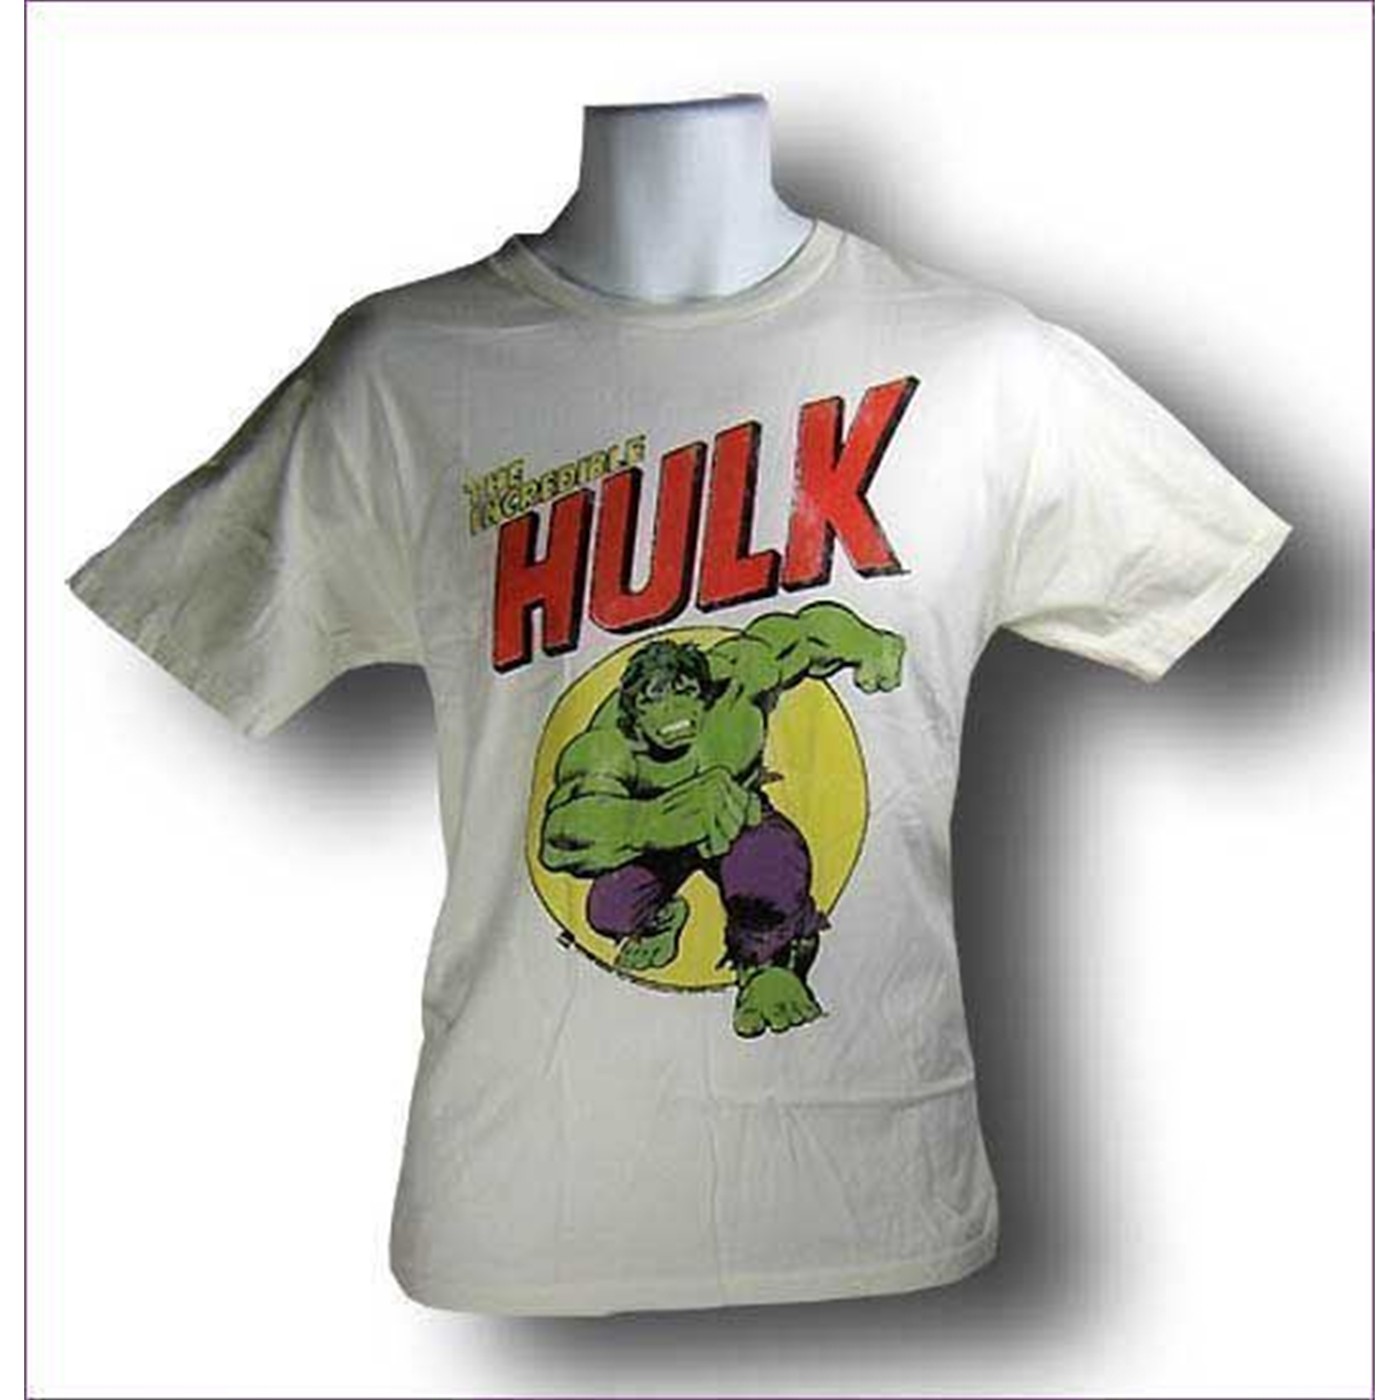 The Hulk T-Shirt Off White Classic